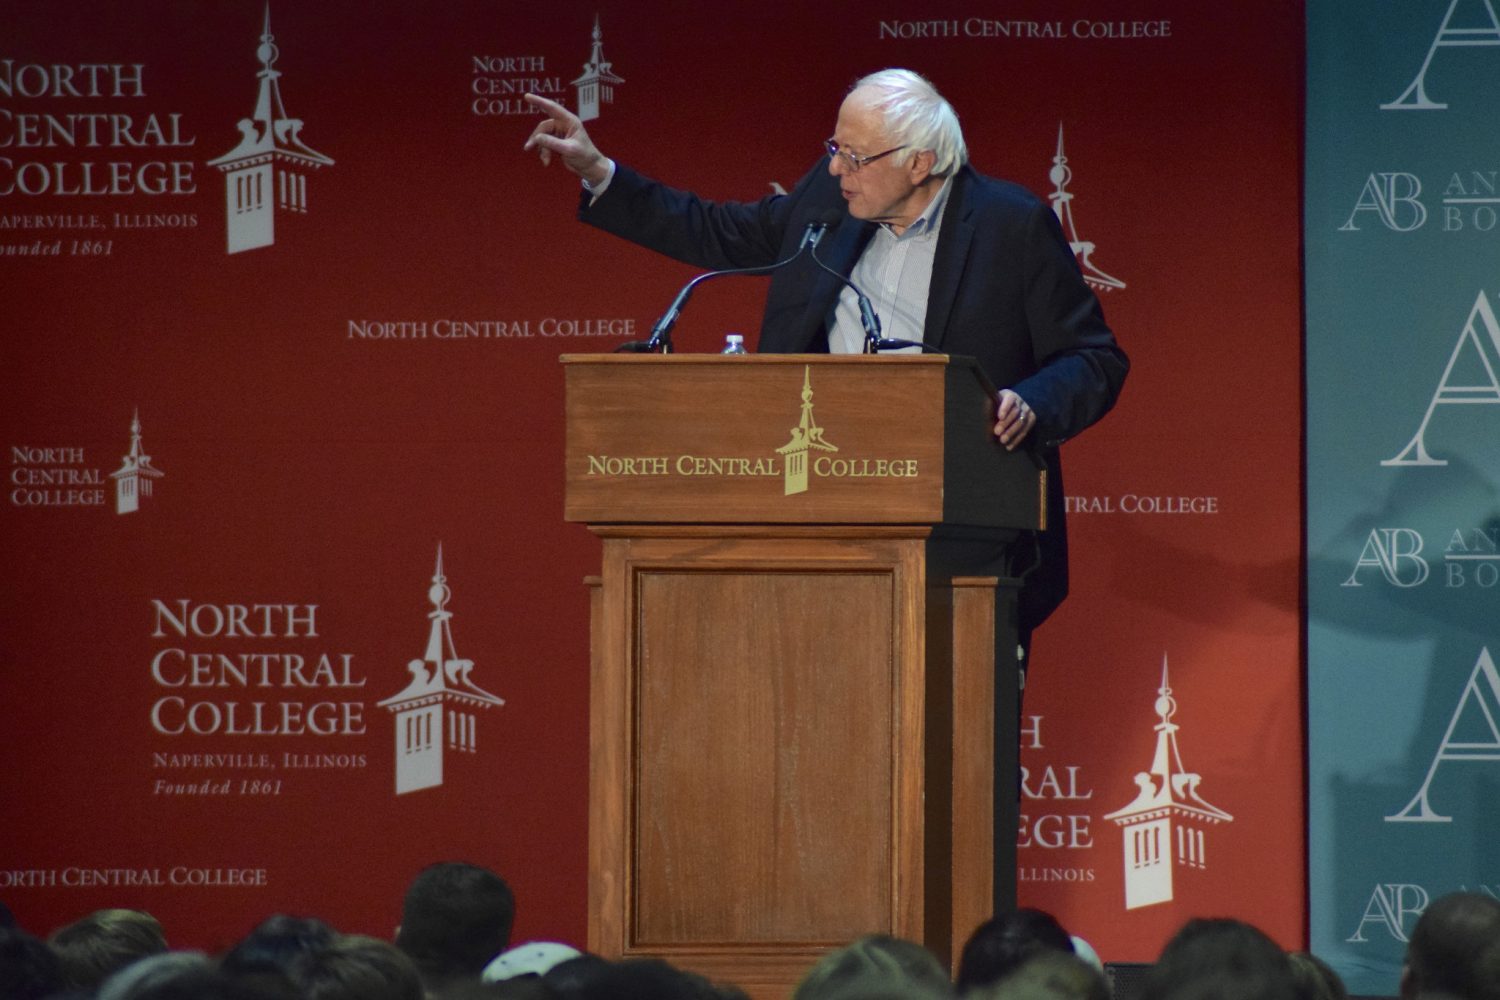 Sanders’ book visit helps bring hope and strengthens community